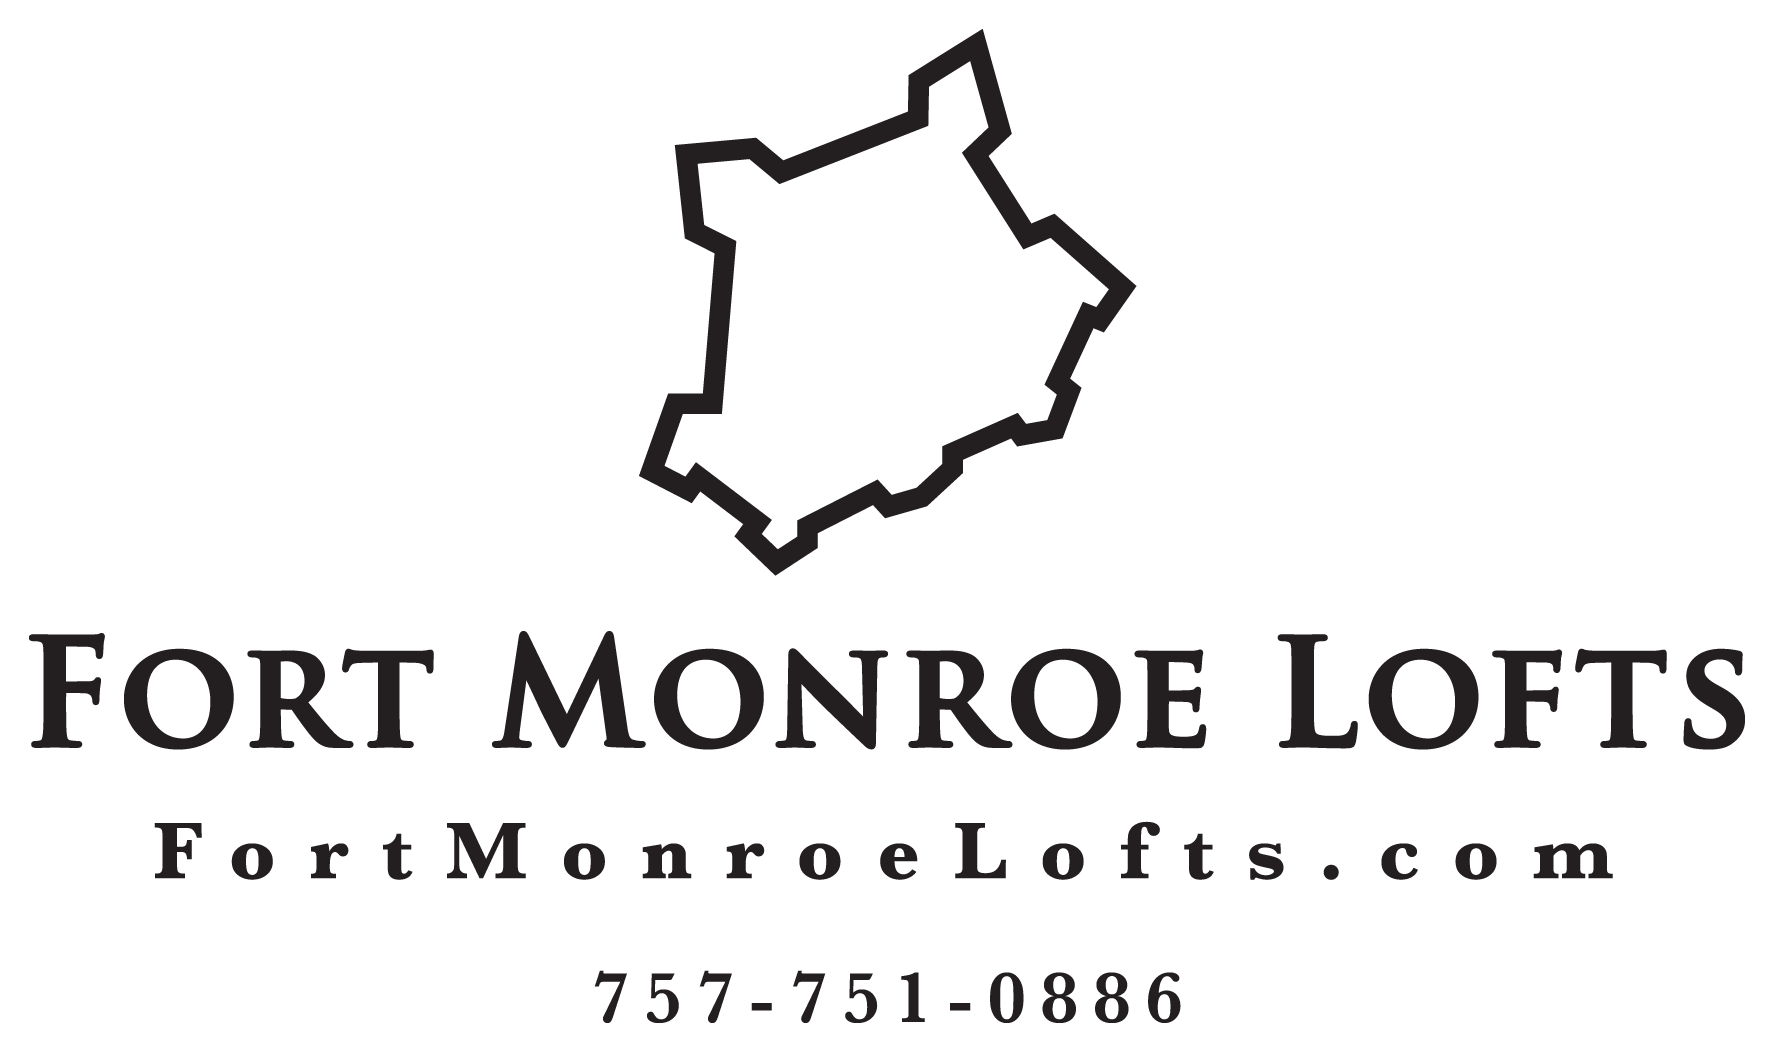 Fort Monroe Lofts